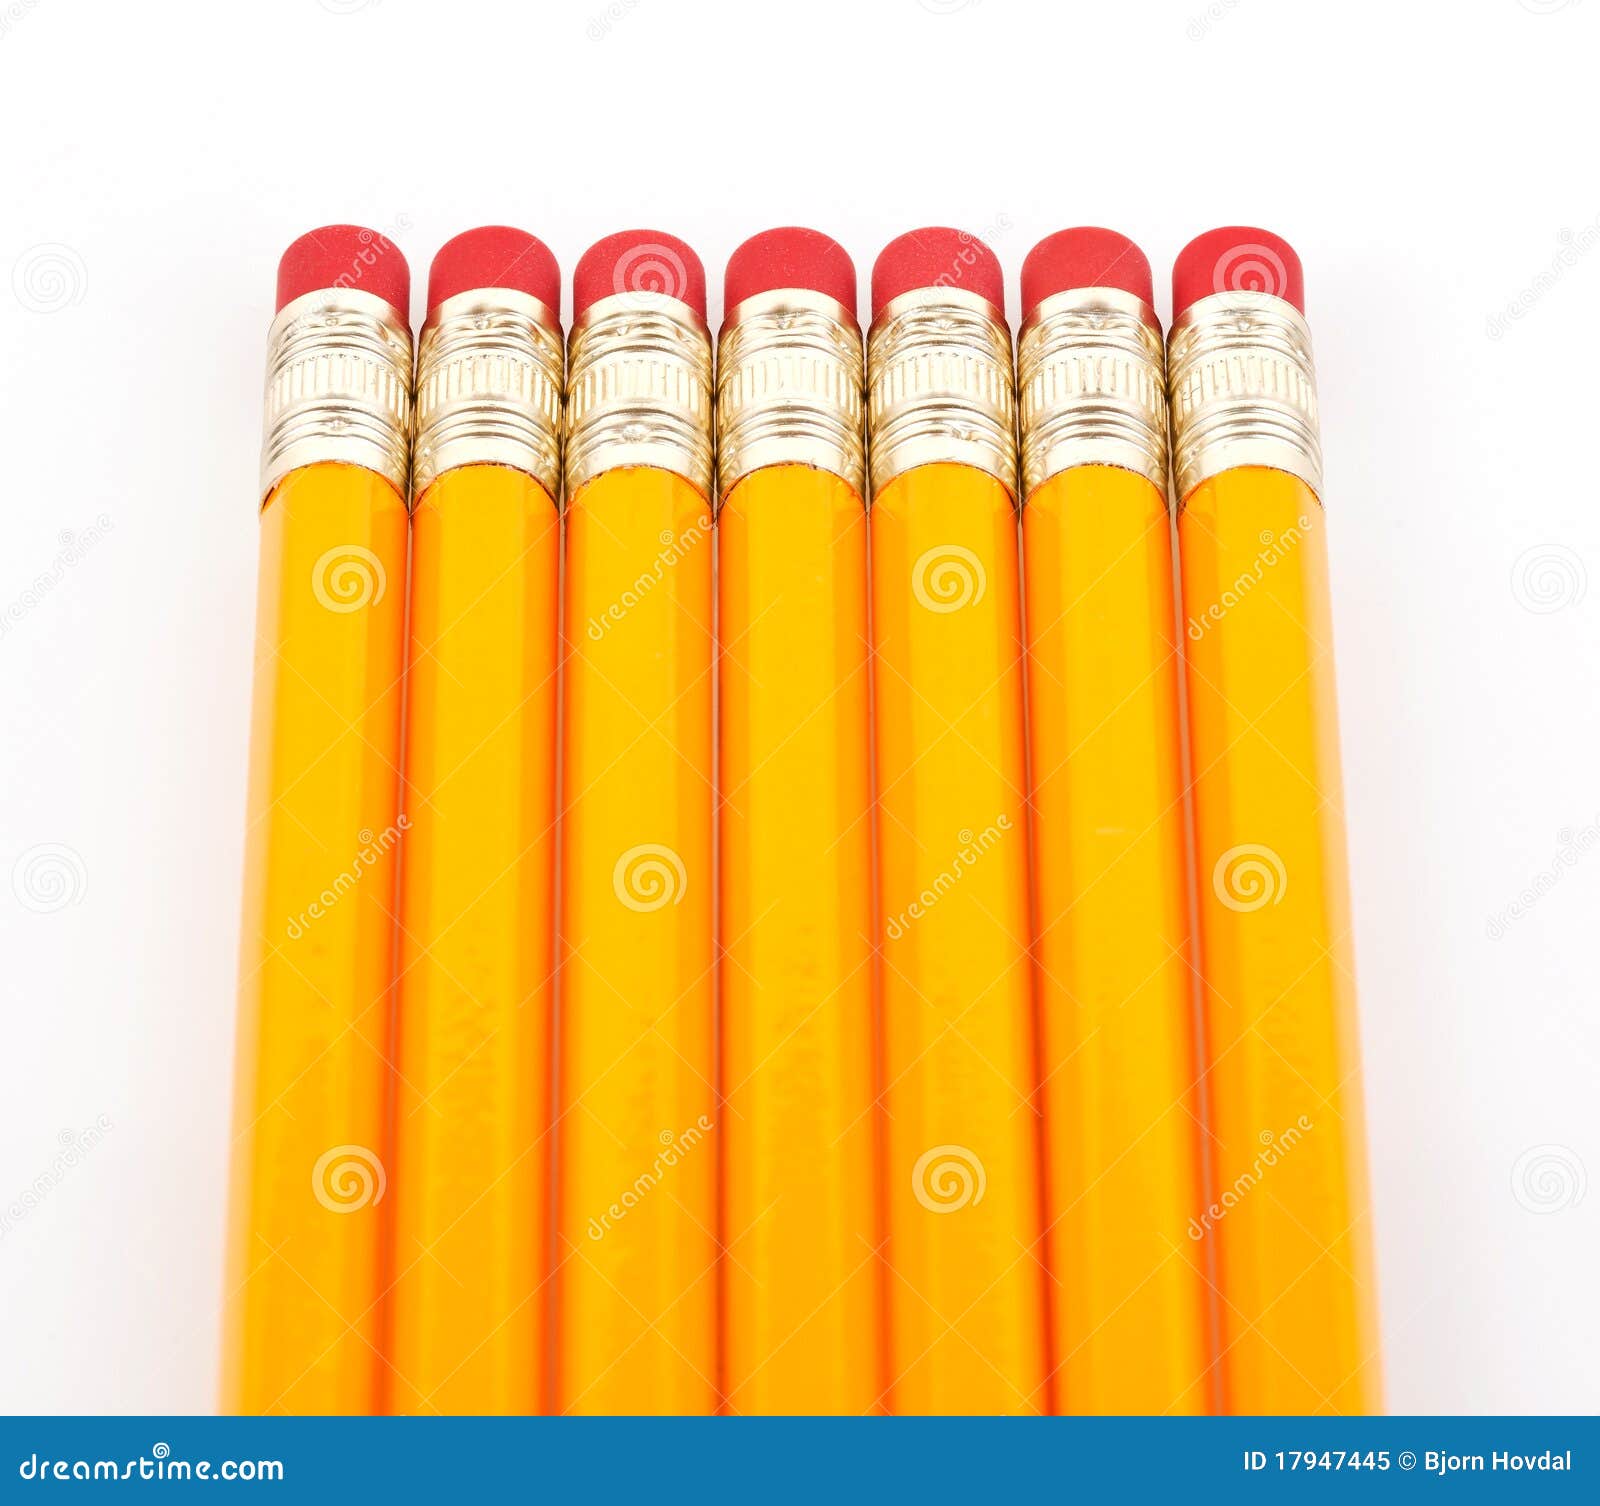 pencils with eraser